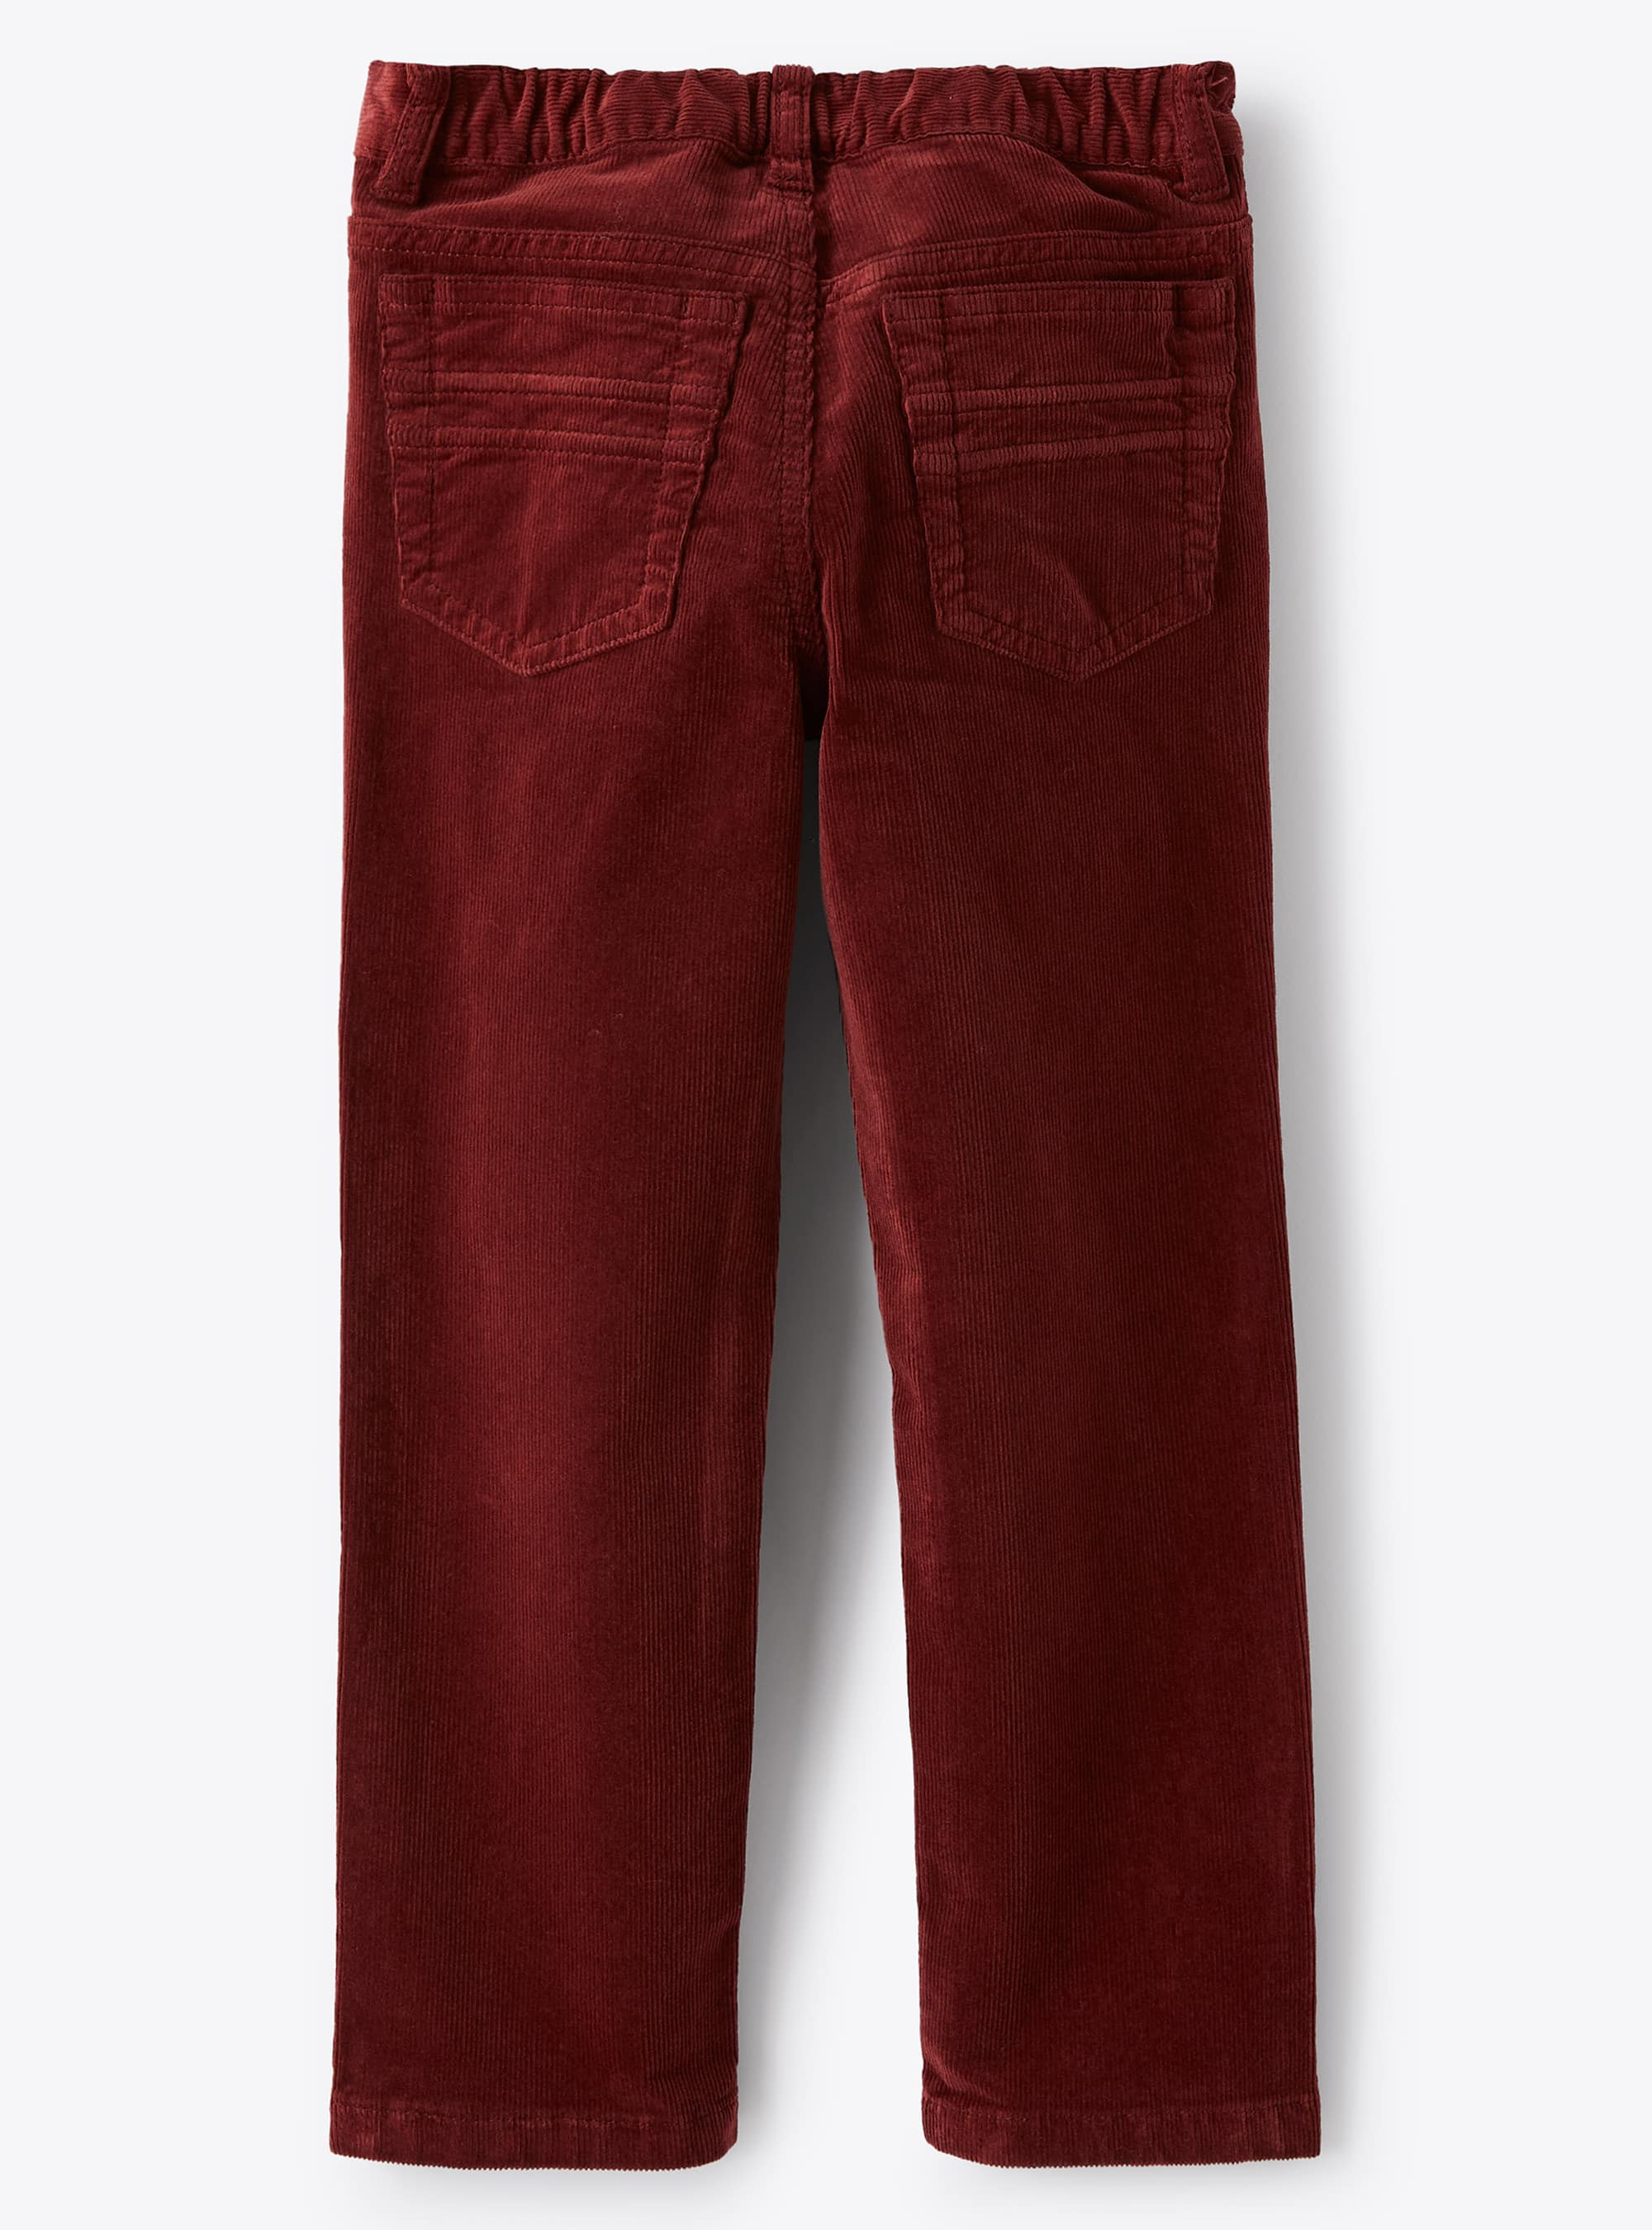 Pantalone regular fit in velluto bordeaux - Bordeaux | Il Gufo